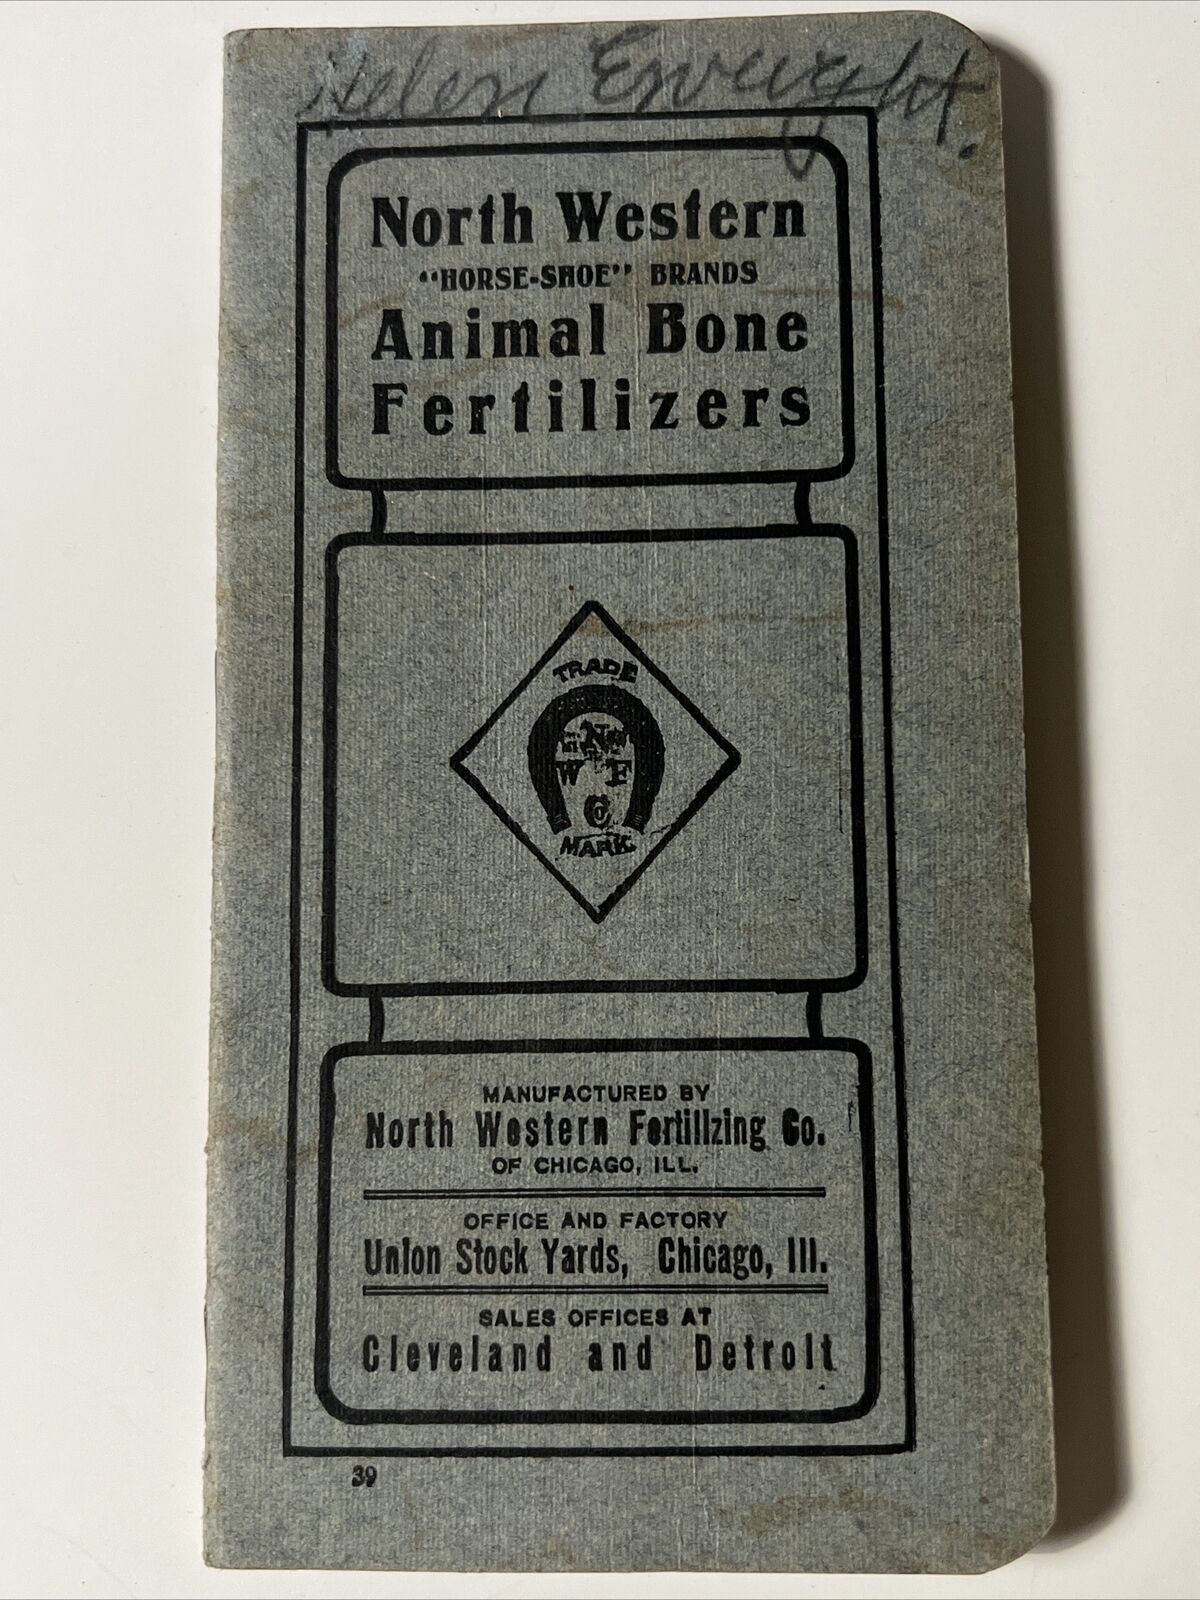 1907 antique NORTH WESTERN Animal Bone Fertilizers Date Book Agriculture